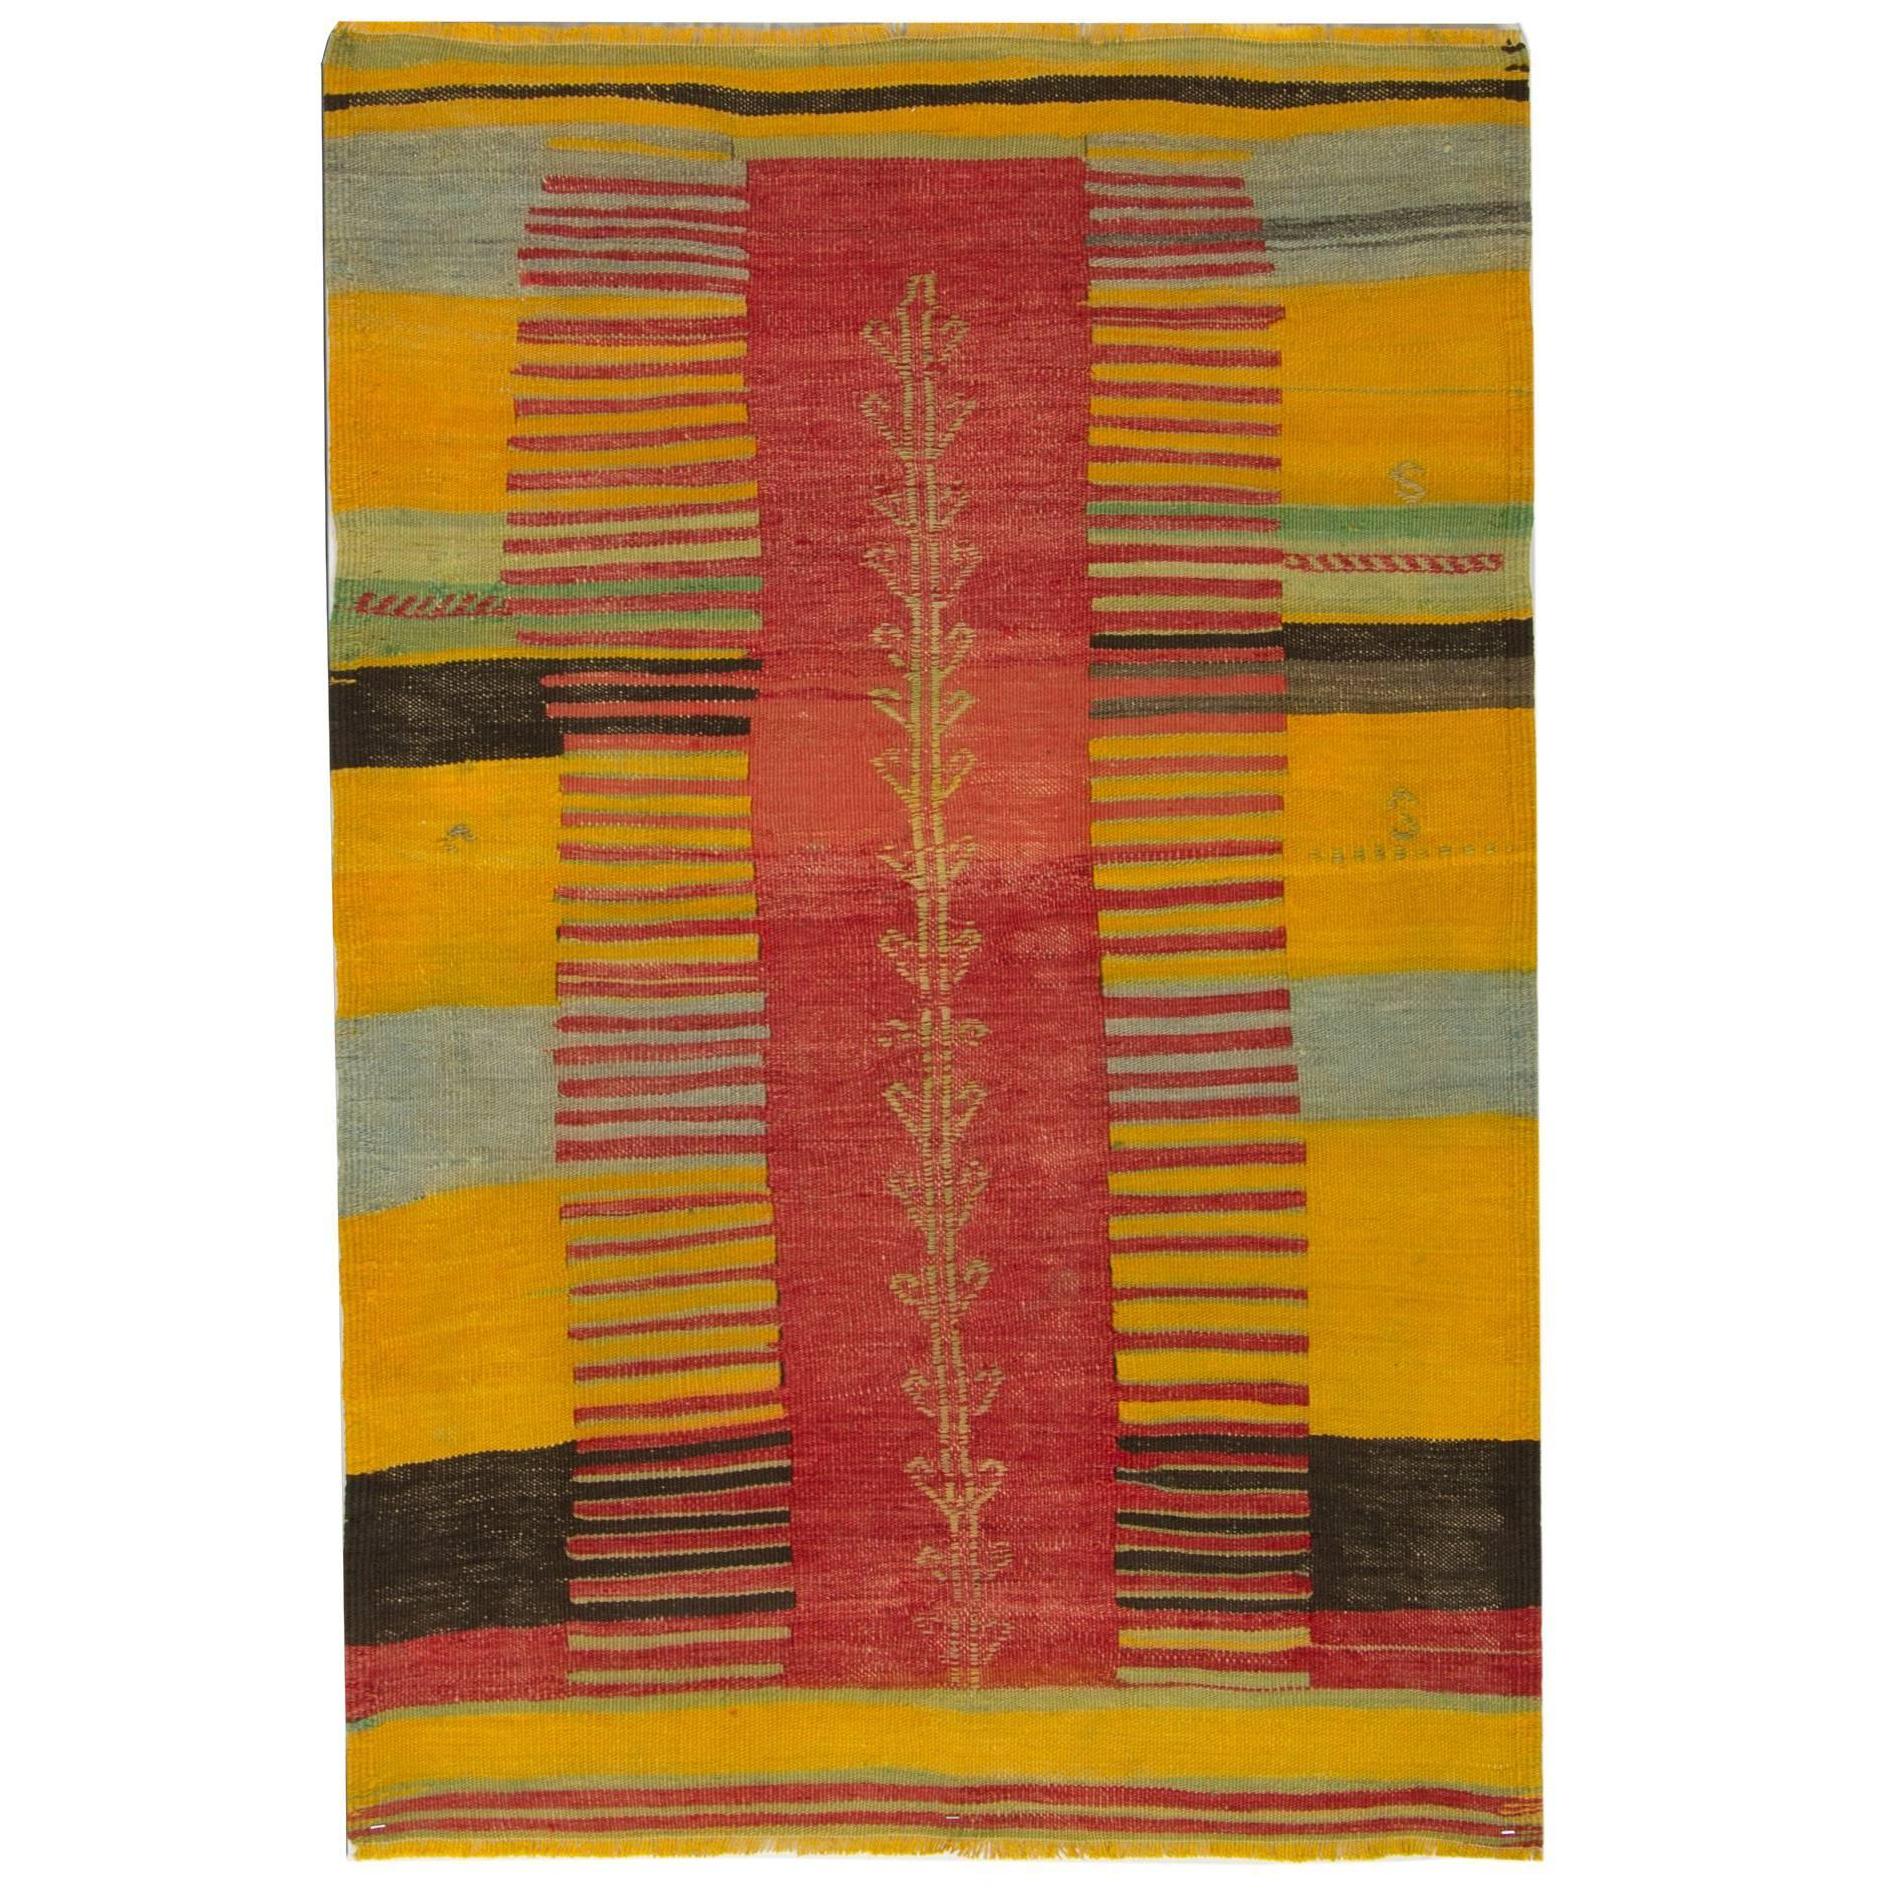 Antique Rugs, Handmade Kilim Rugs from Turkey Yellow Turkish Rug